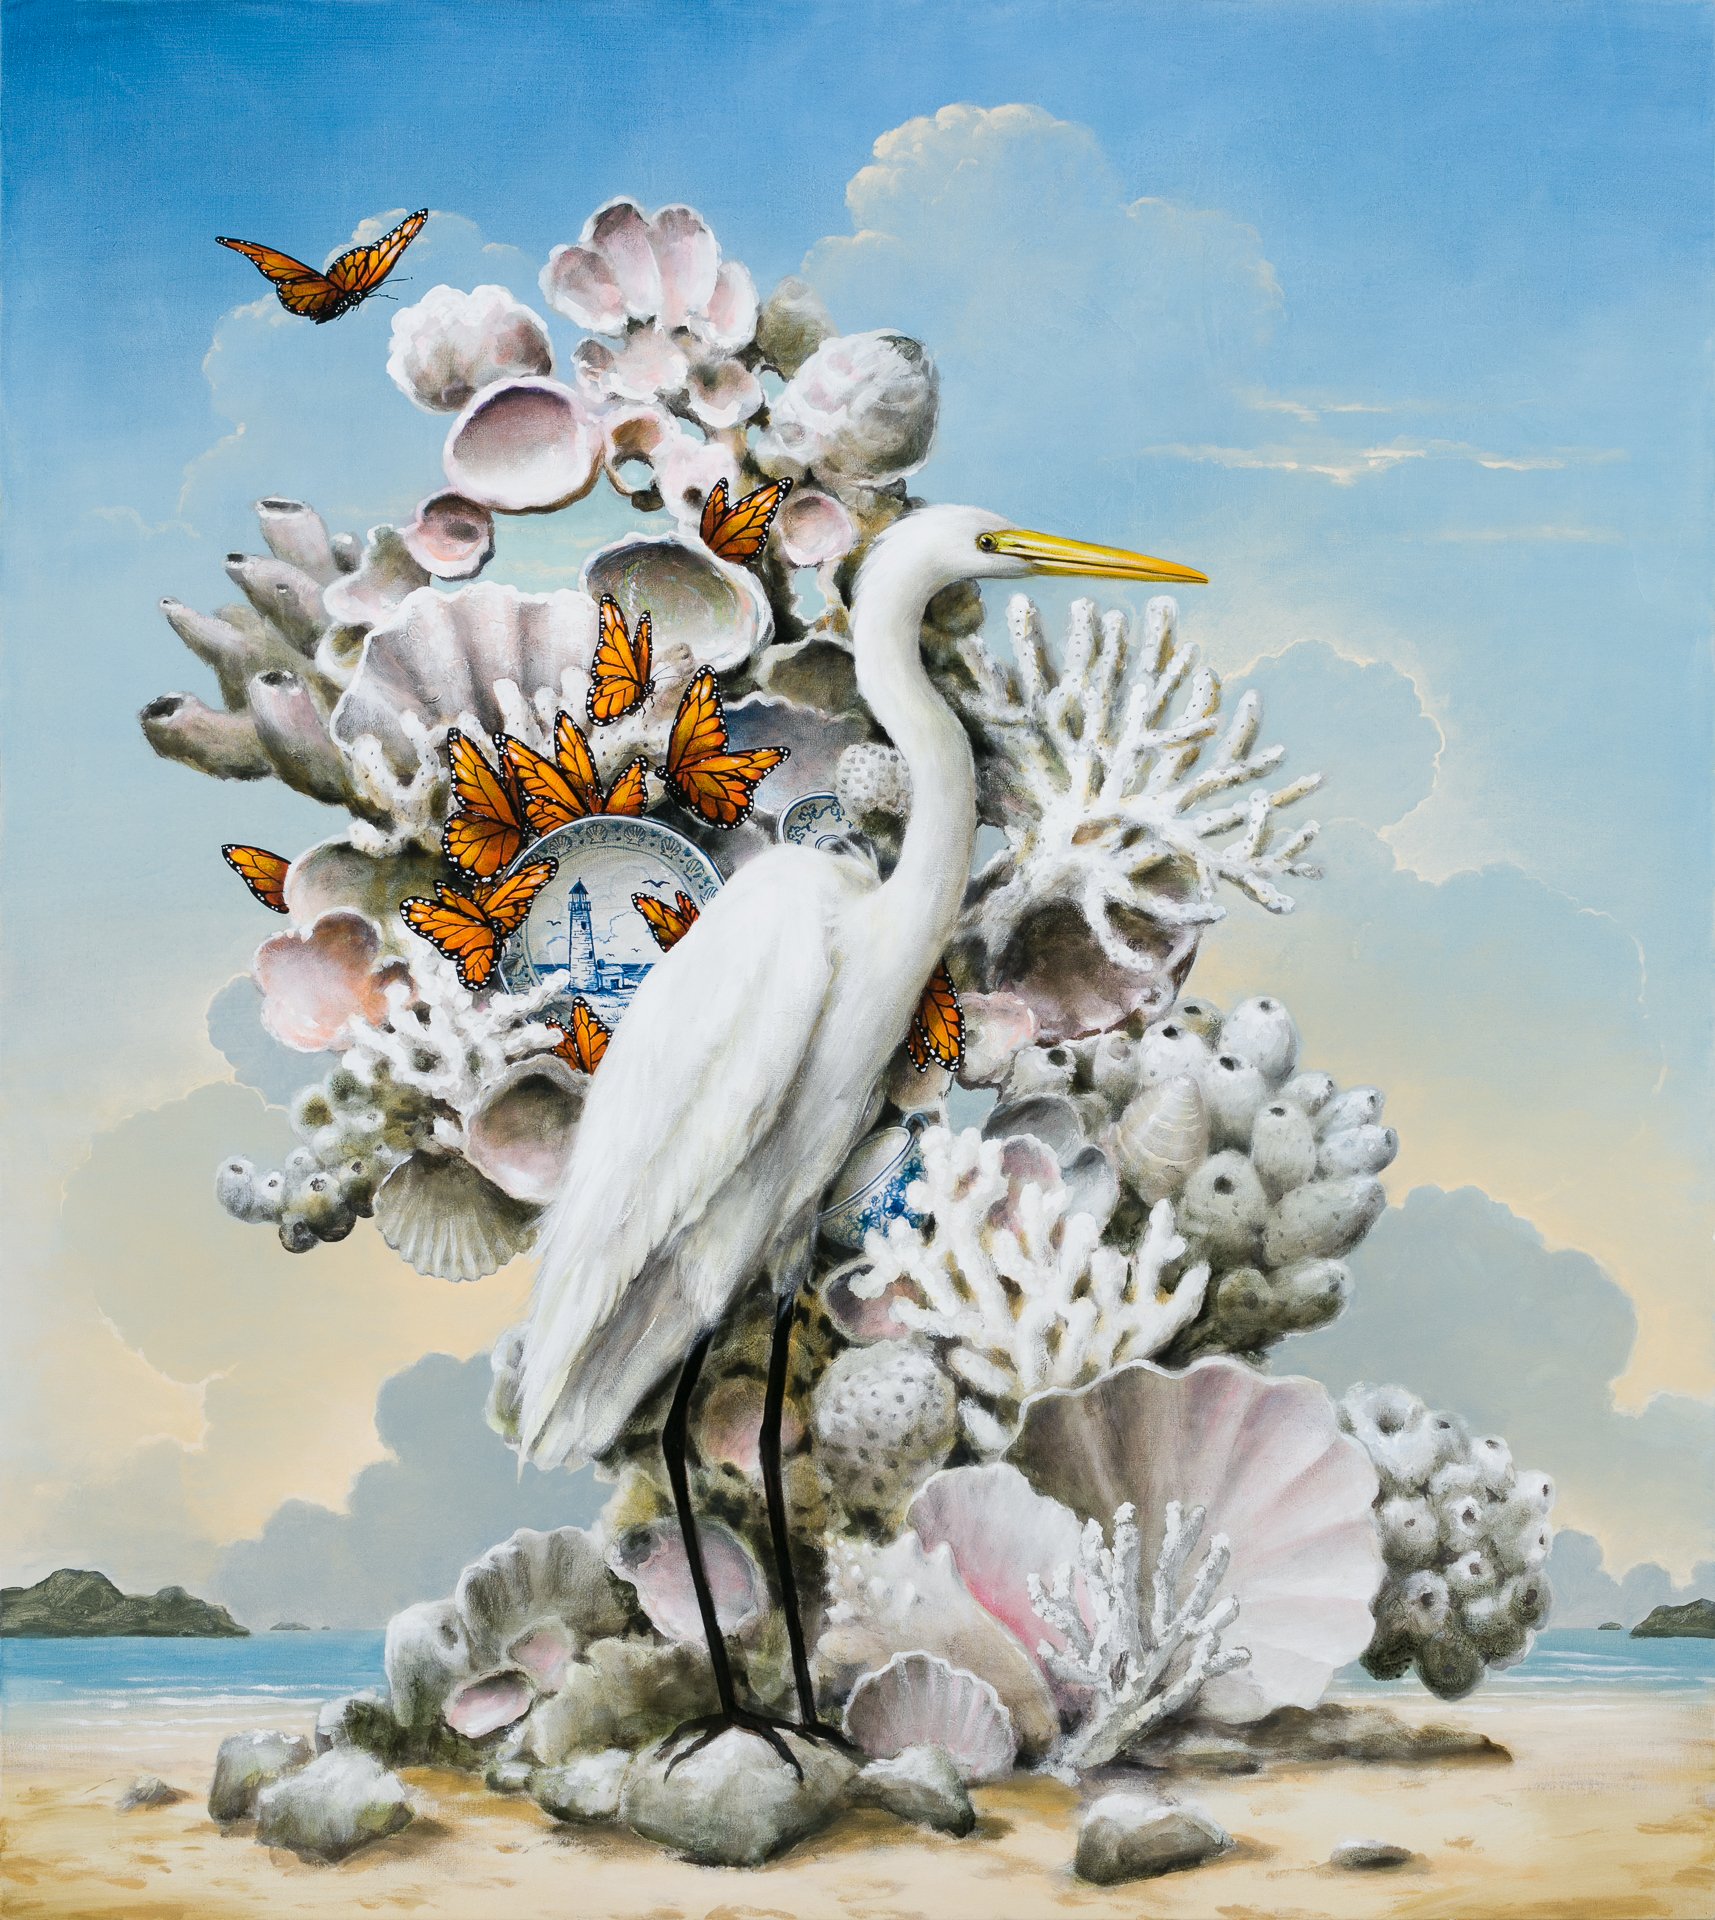 Lighthouse Reef, 60"x54", acrylic on canvas